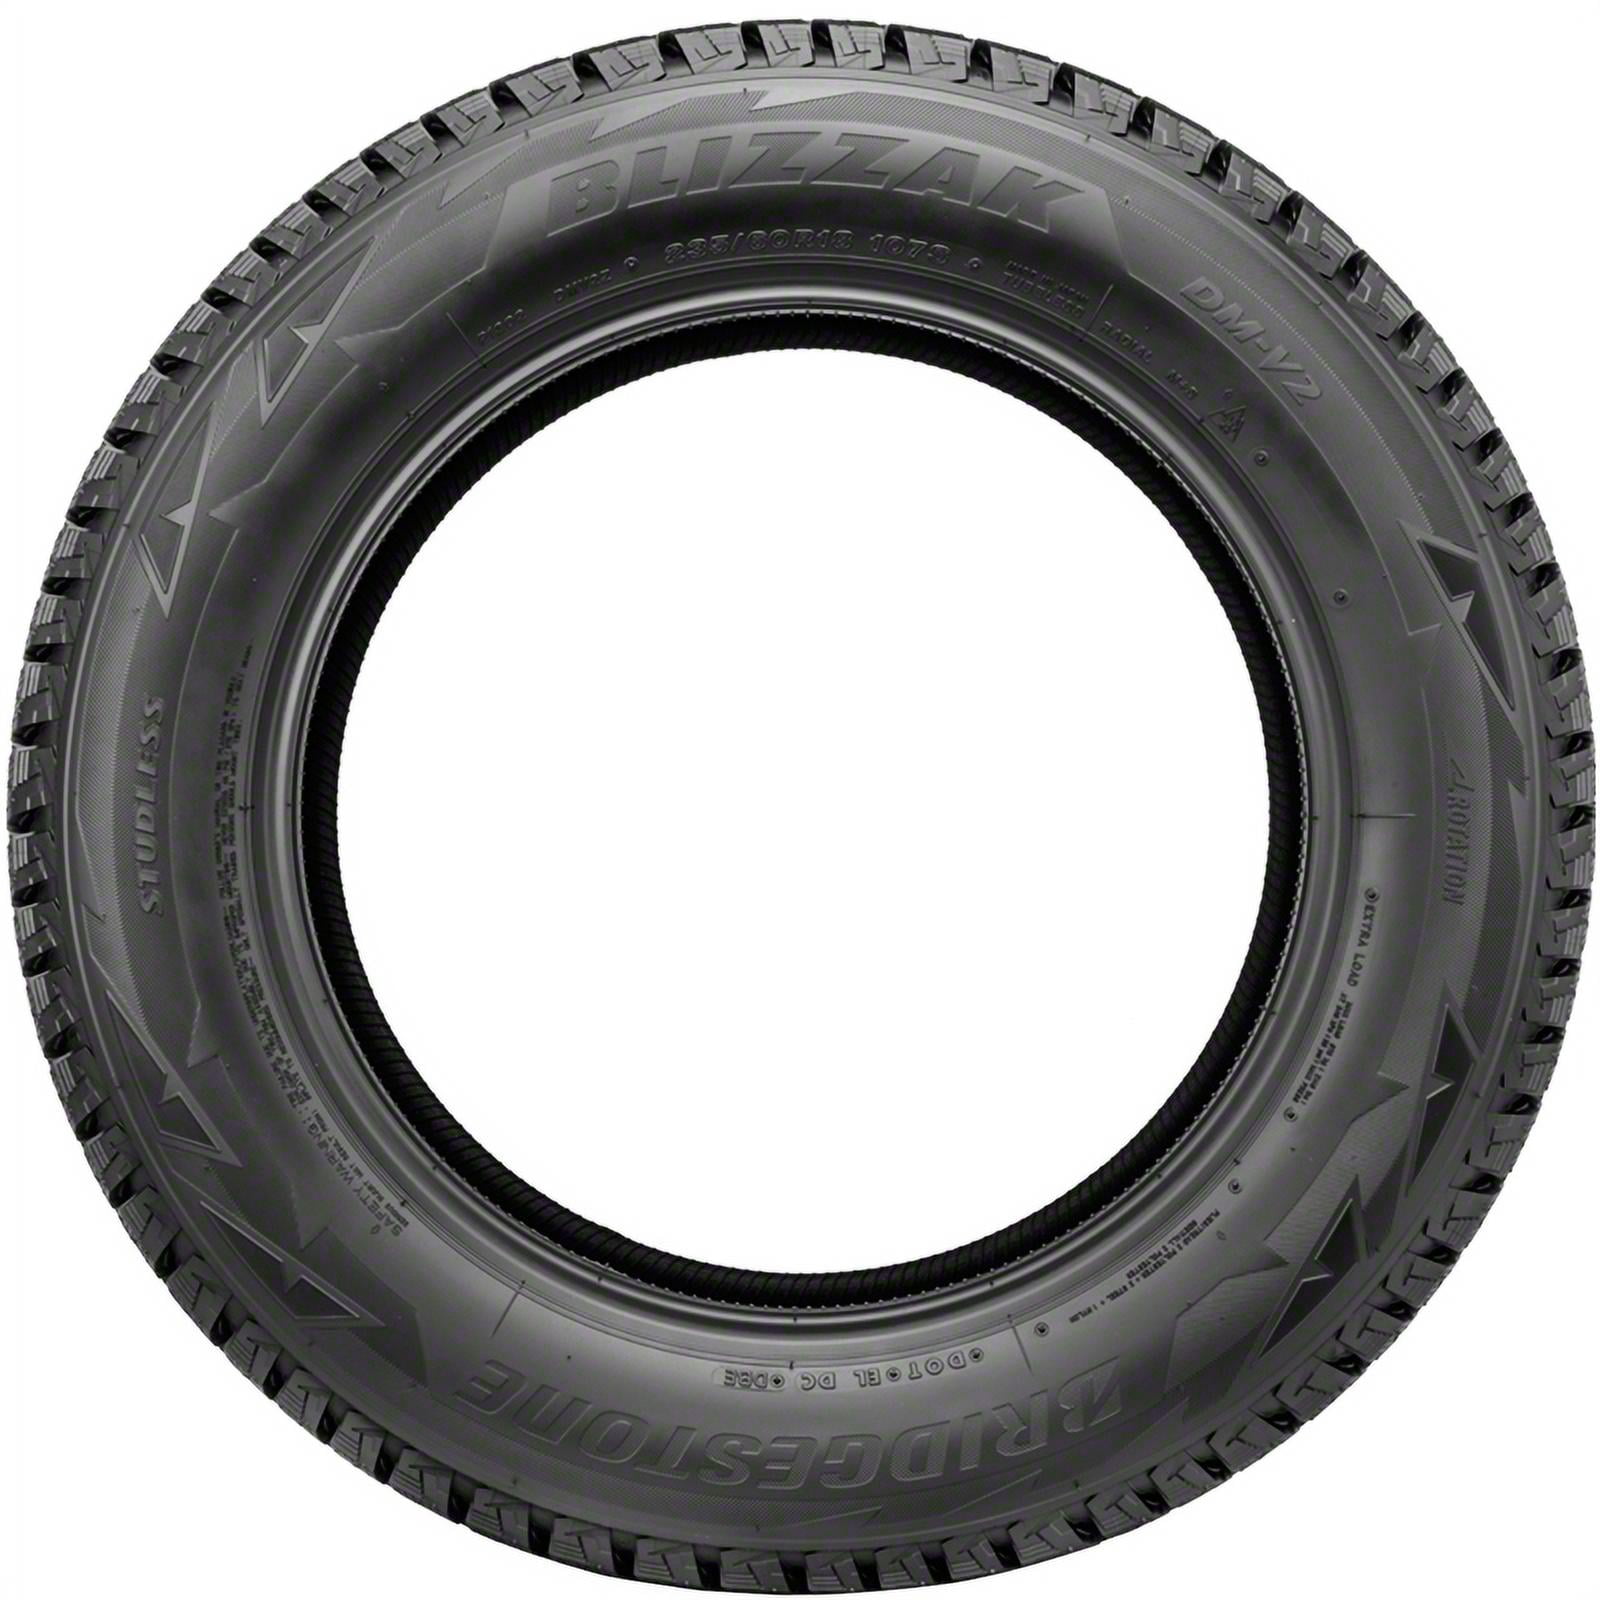 Bridgestone Blizzak DM-V2 235/65-17 108 S Tire